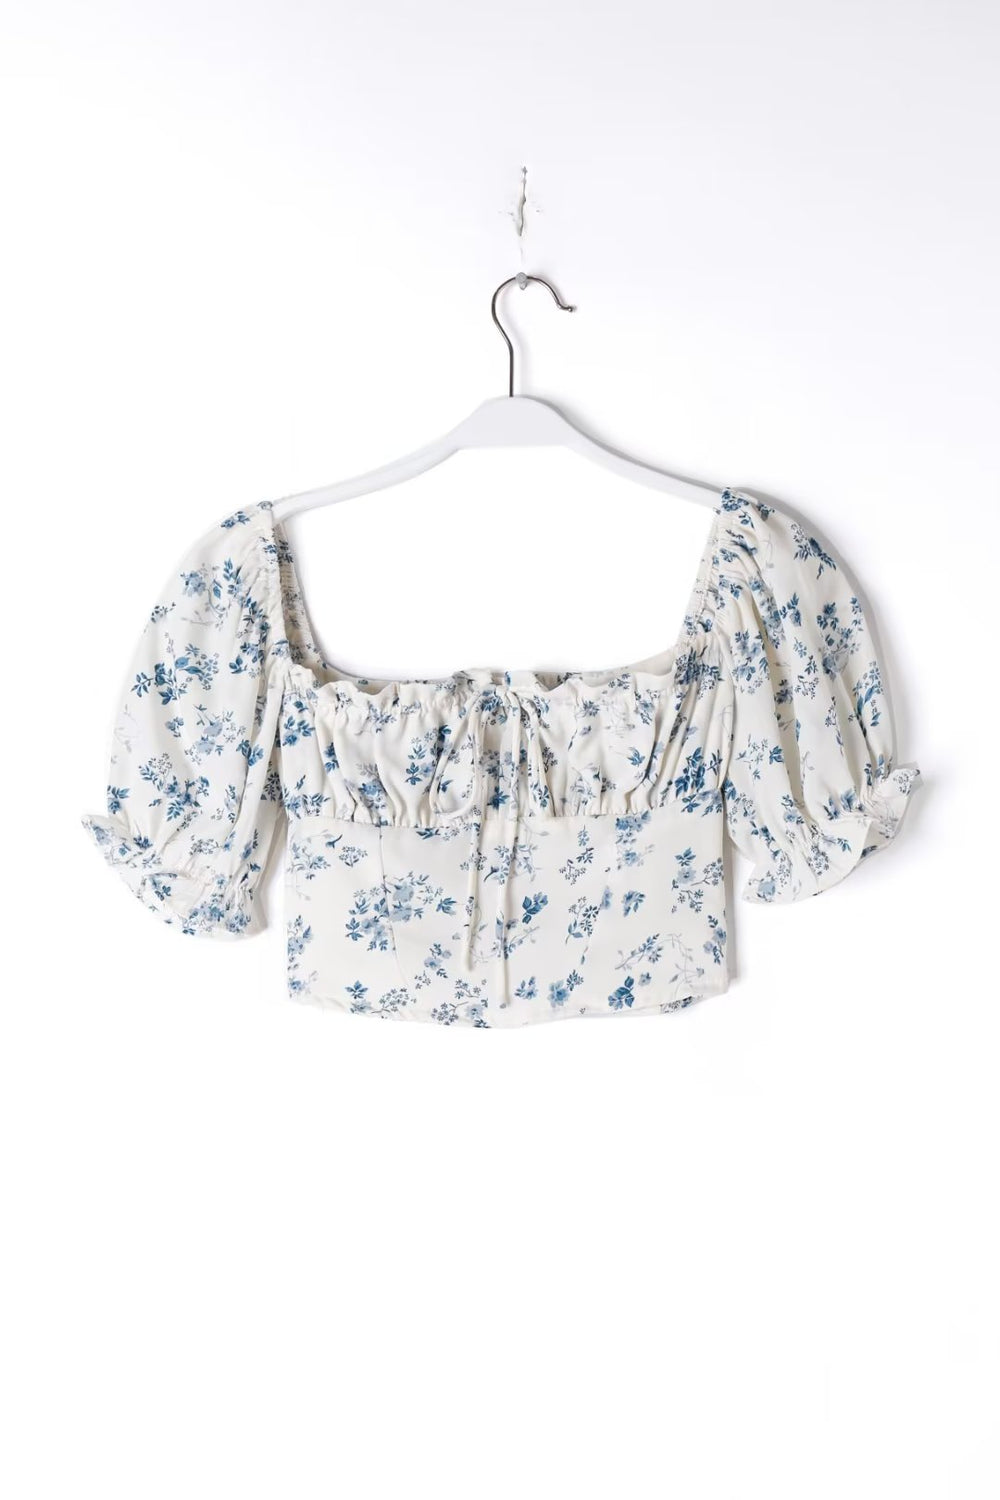 Summer Pullover Square Collar Slimming Curved Hem Short Print Women Shirt Top